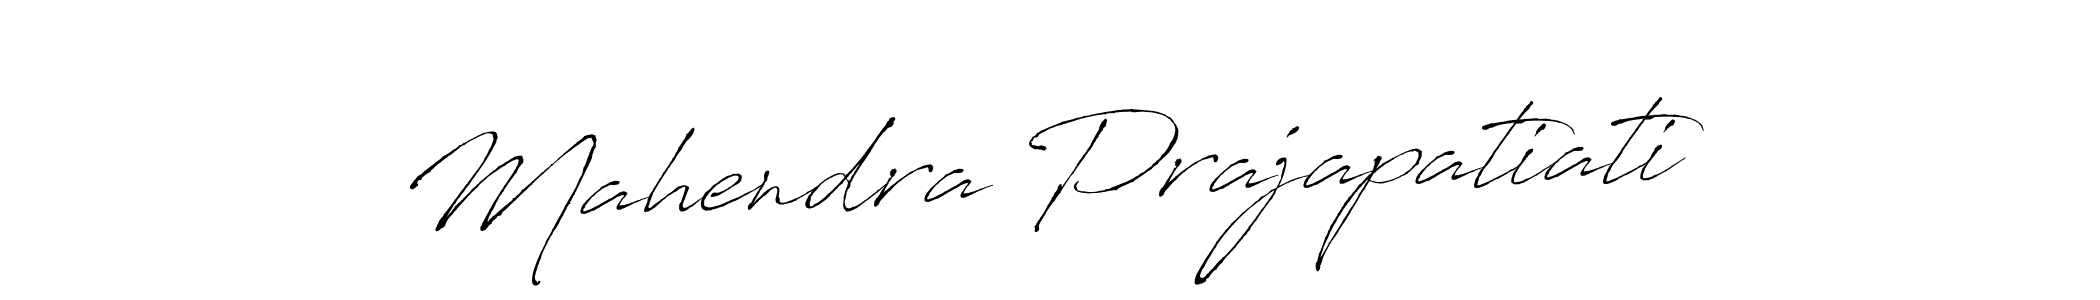 How to Draw Mahendra Prajapatiati signature style? Antro_Vectra is a latest design signature styles for name Mahendra Prajapatiati. Mahendra Prajapatiati signature style 6 images and pictures png